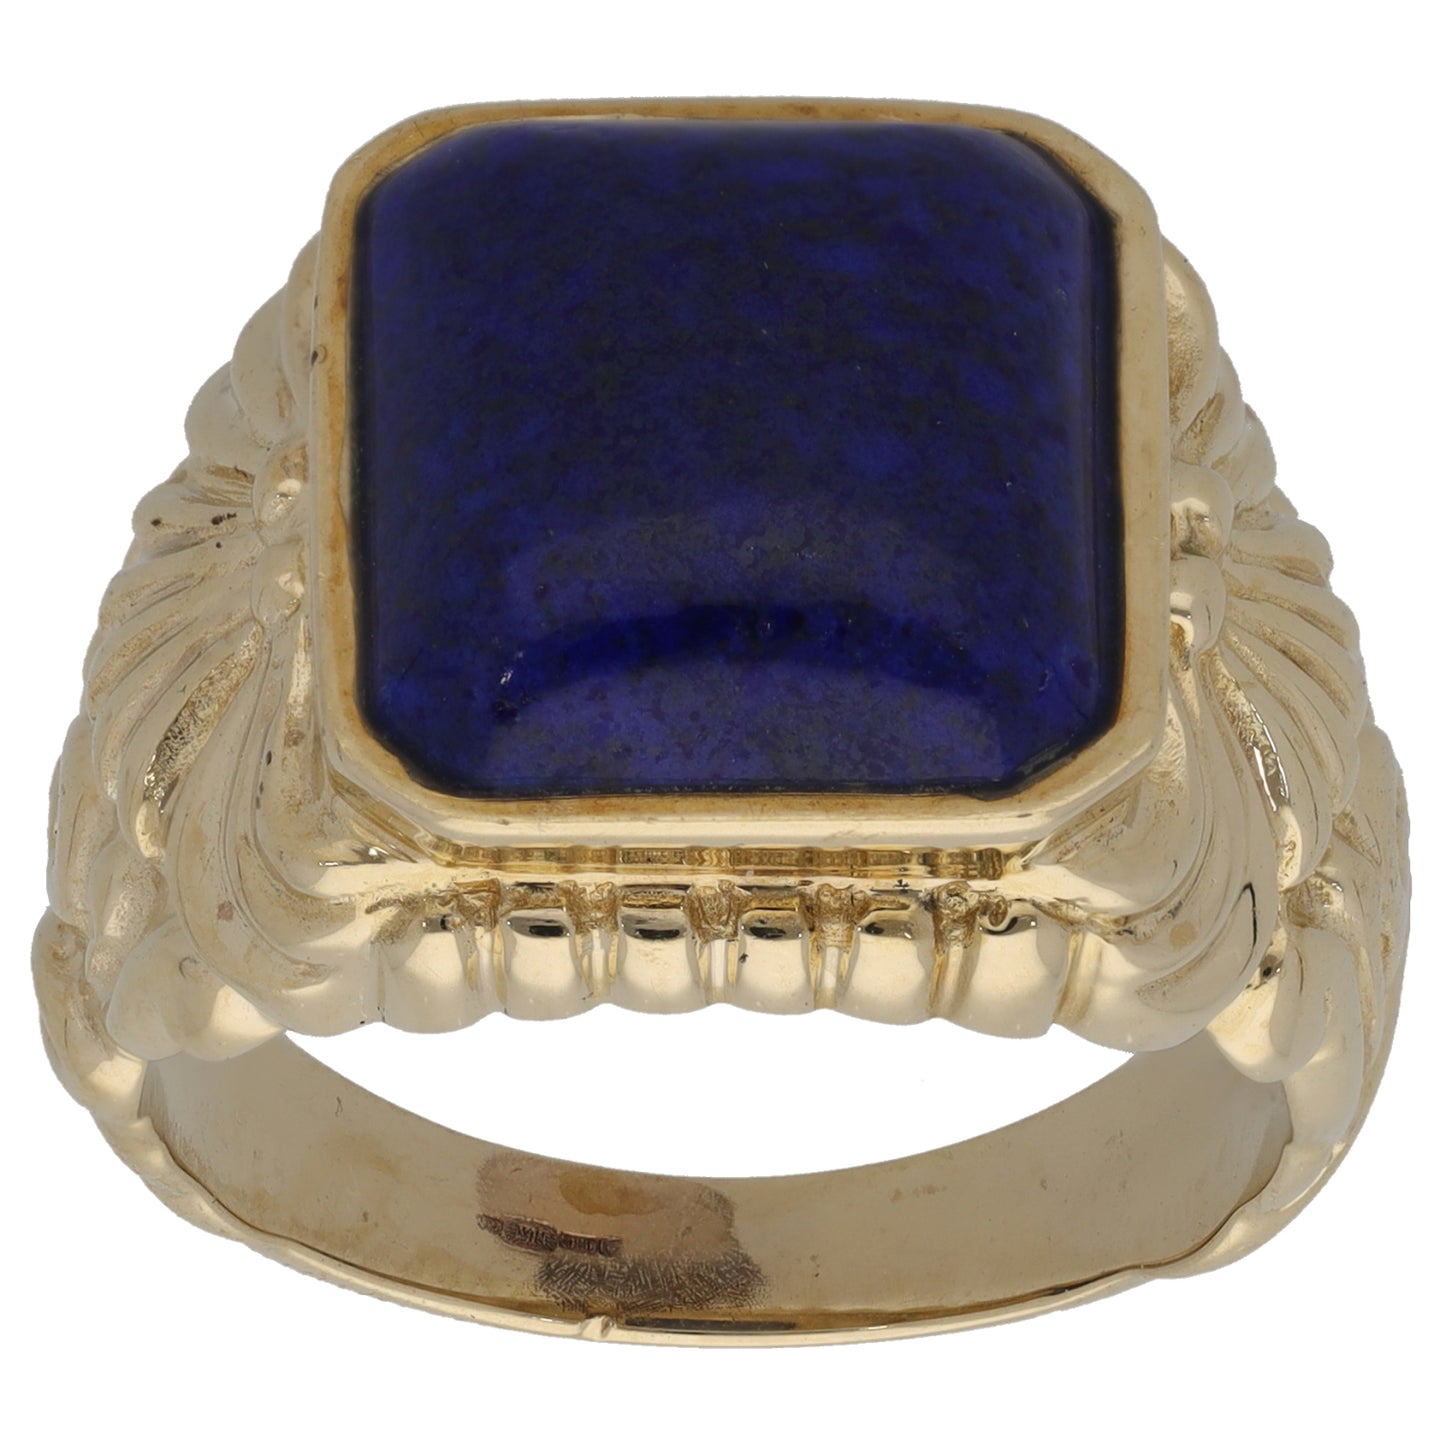 9ct Gold Lapis Lazuli Patterned Signet Ring Size S